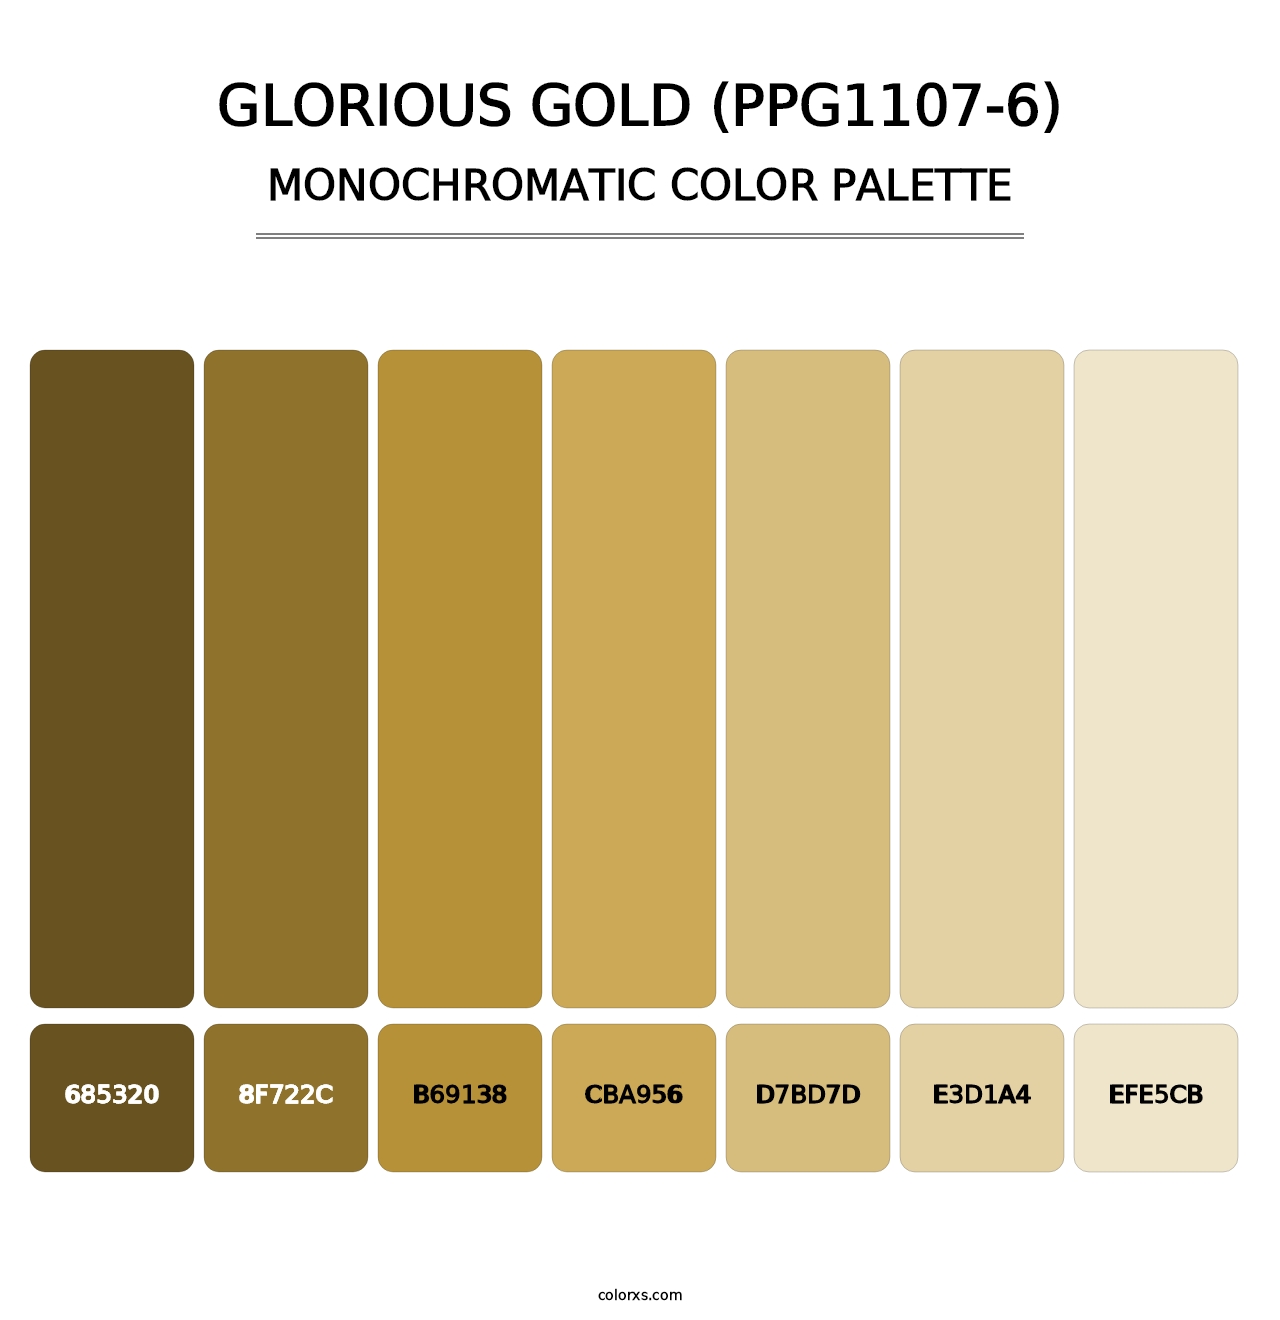 Glorious Gold (PPG1107-6) - Monochromatic Color Palette